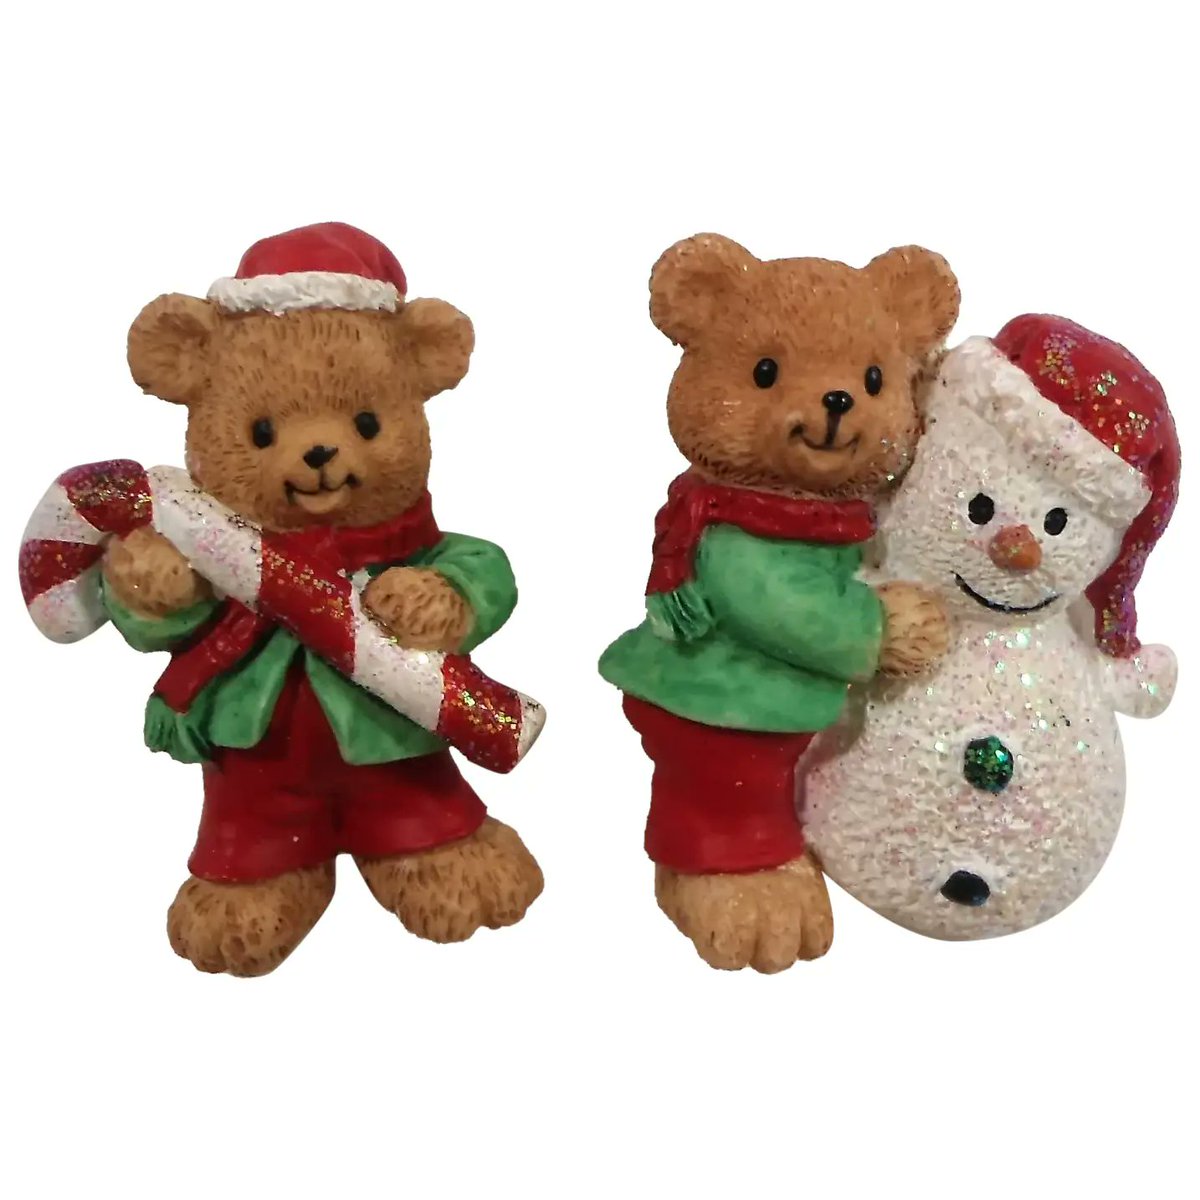 Vintage Avon Pair Christmas Teddy Bear Pins 1998 Mint in Original Box. Make an Offer!
#ebay #vintage #retro #jewelry #bargains #brooch #necklace #figurals #designer #hautecouture #giftideas #diva #fashionista #glam #bargains #holiday #Christmas
ebay.com/itm/1258719050…